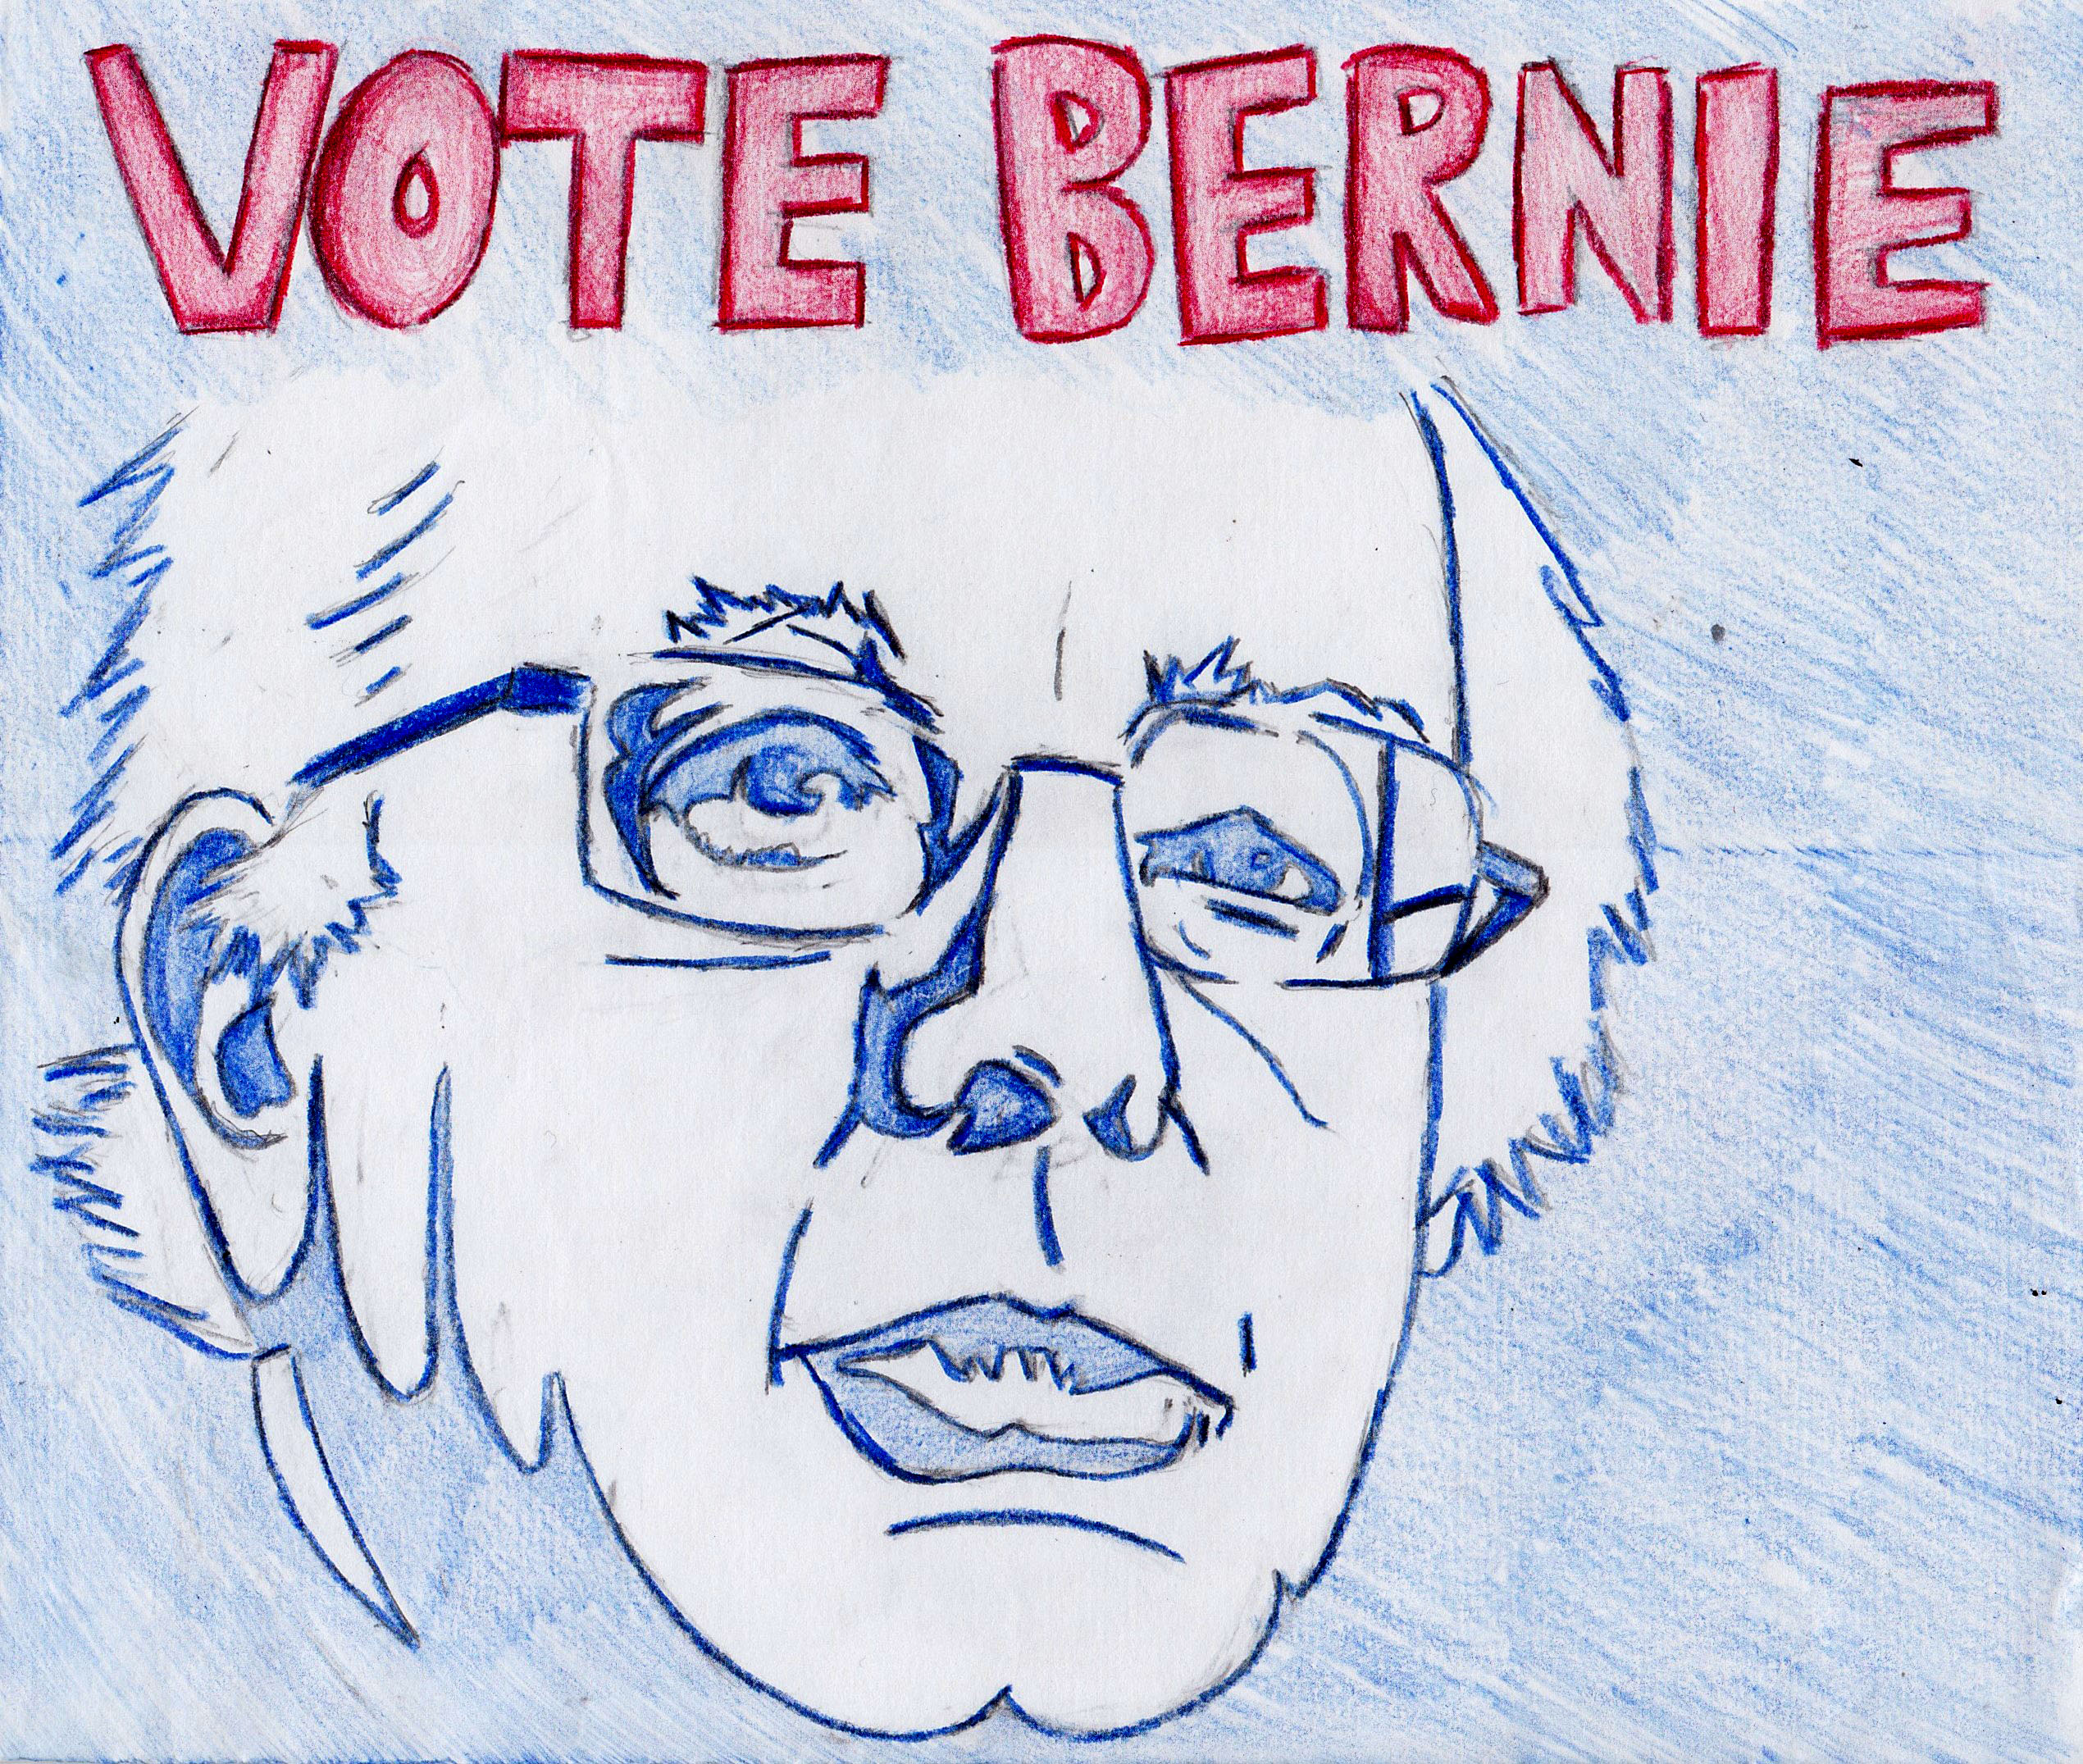 Bernie Sanders illustration by Danielle Kairuz.